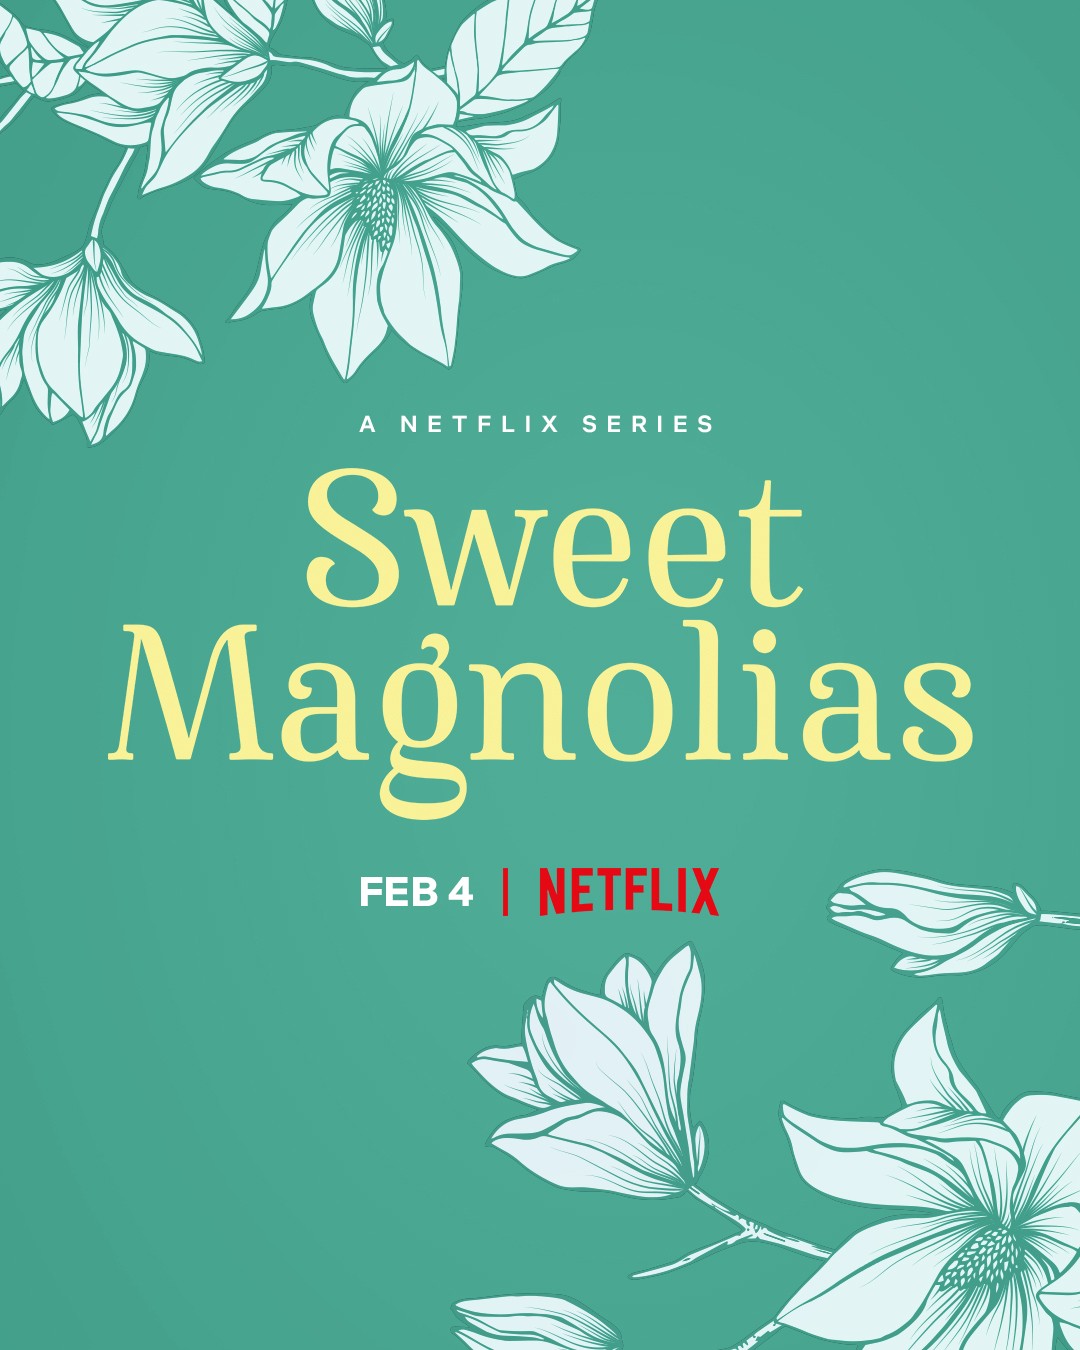 steel magnolias 2022 dvd cover